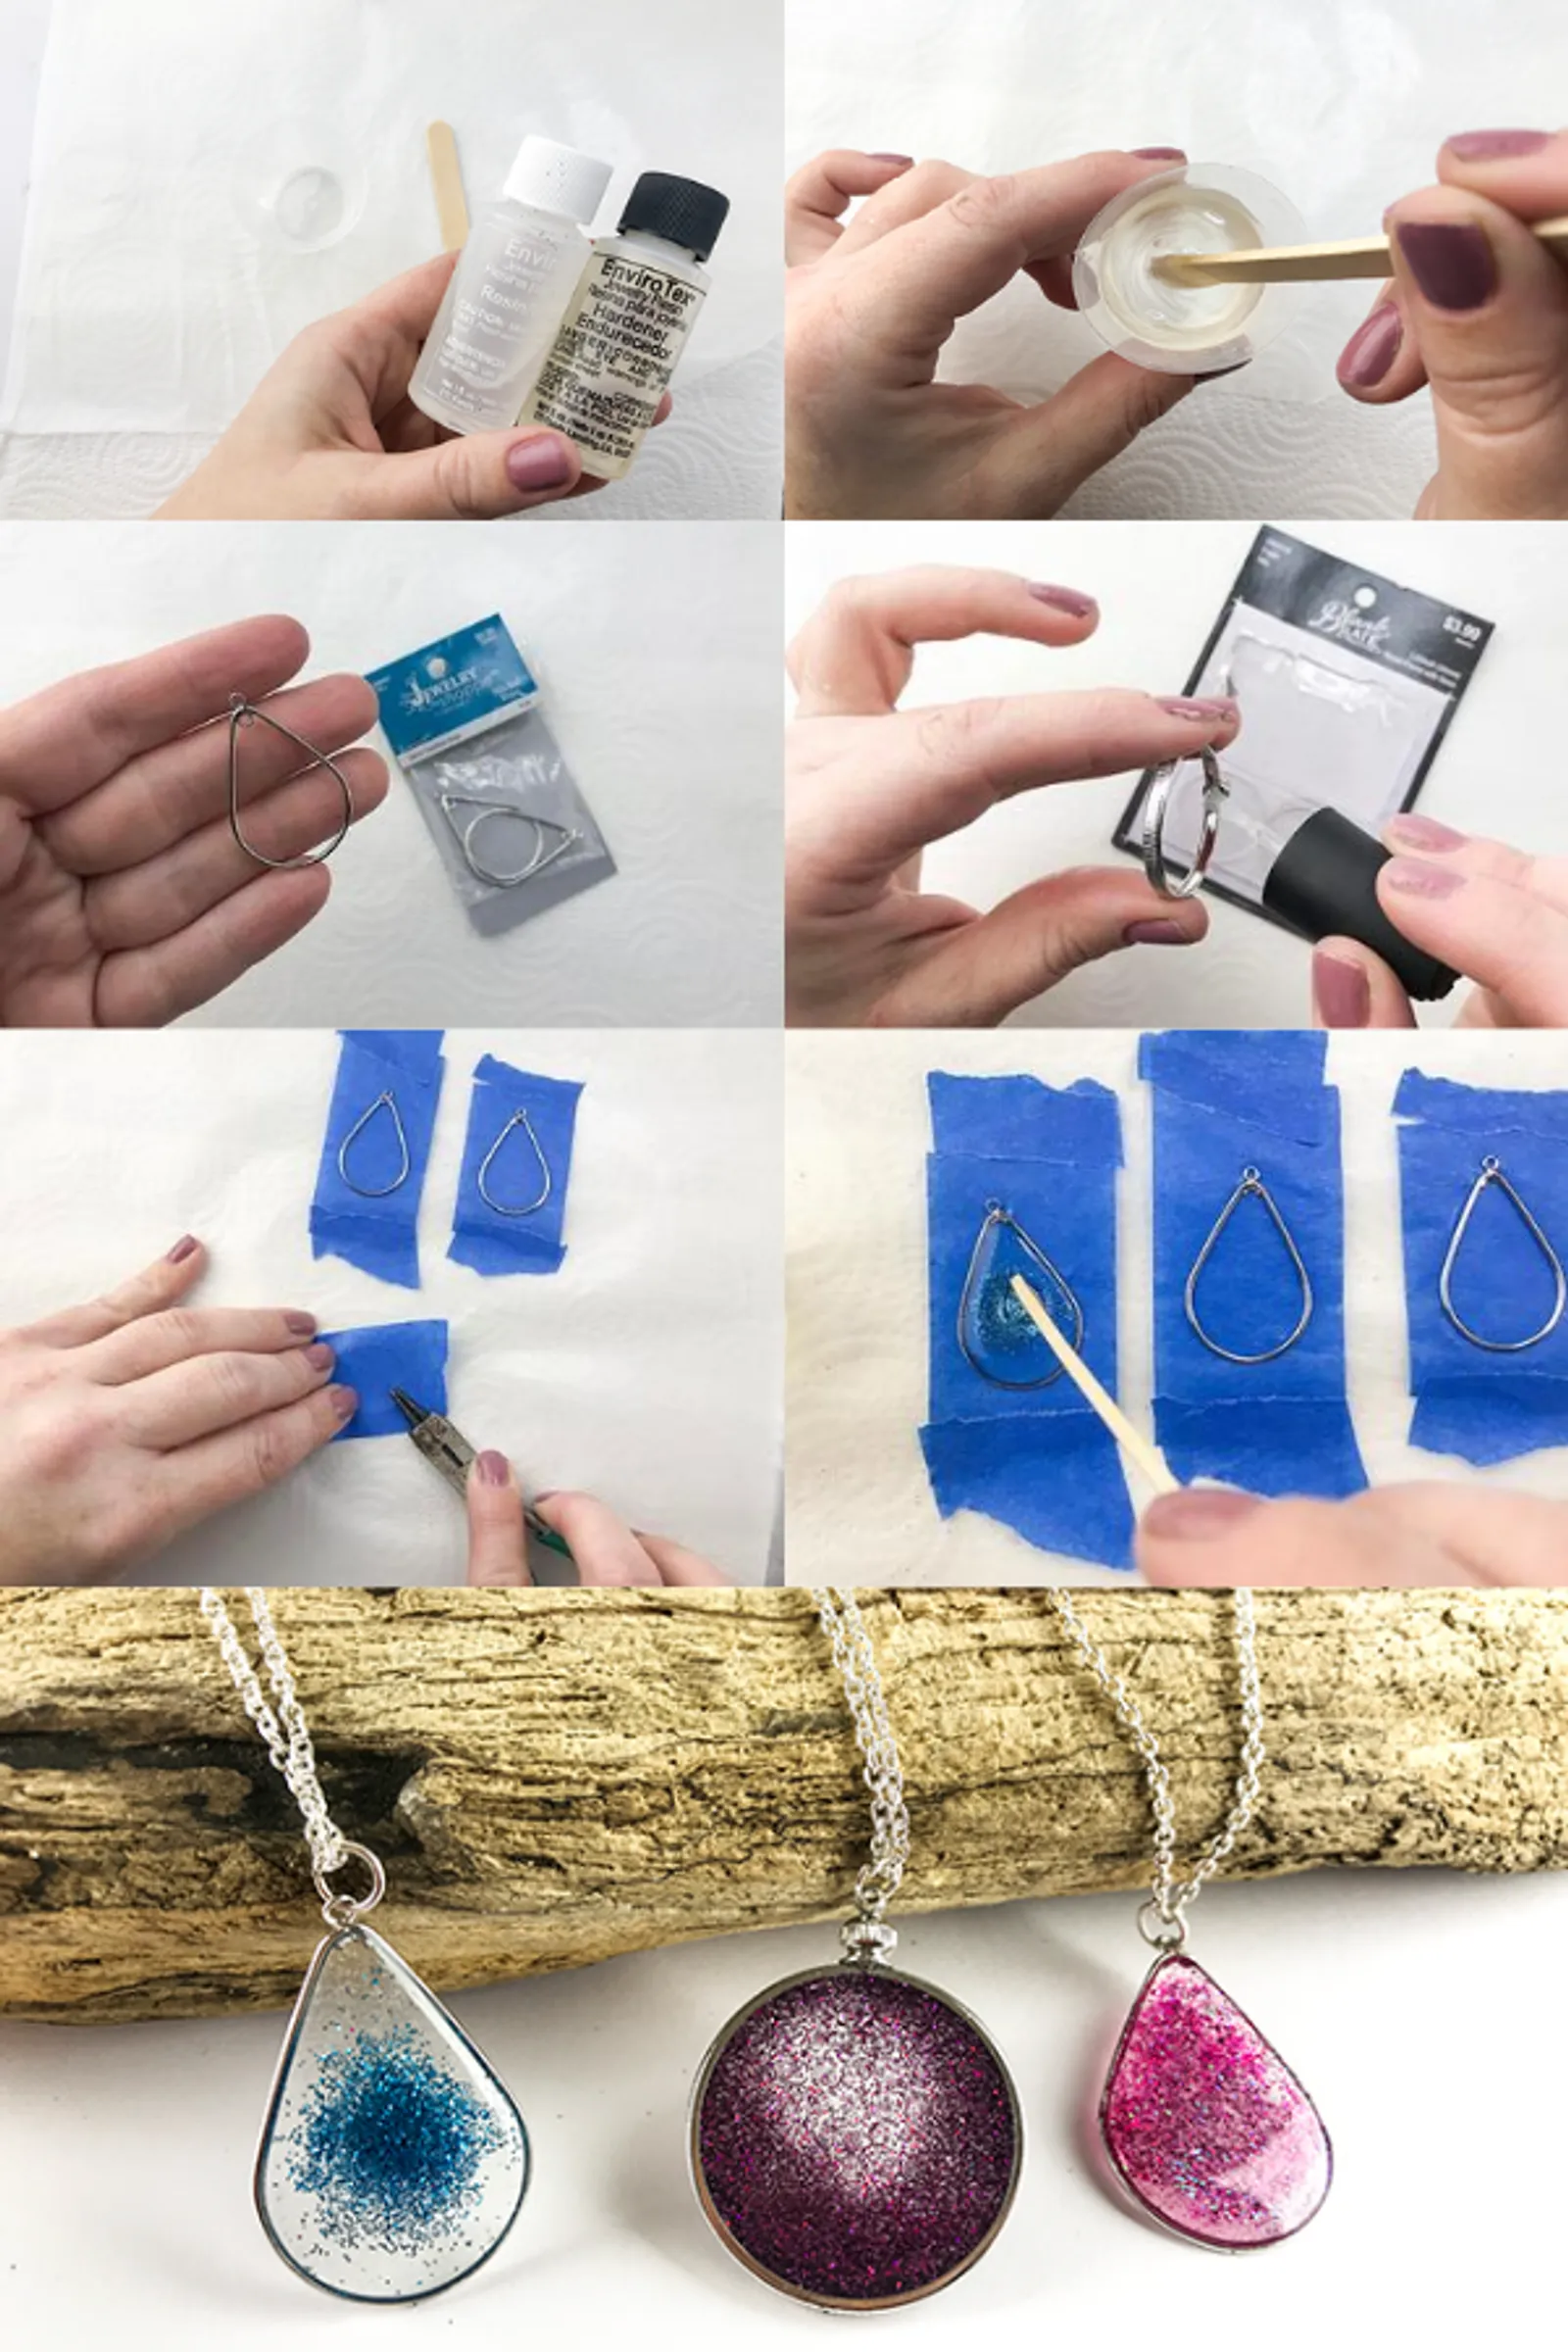 Dari Perhiasan Hingga Phone Case, 9 DIY dari Resin yang Mudah Dibuat